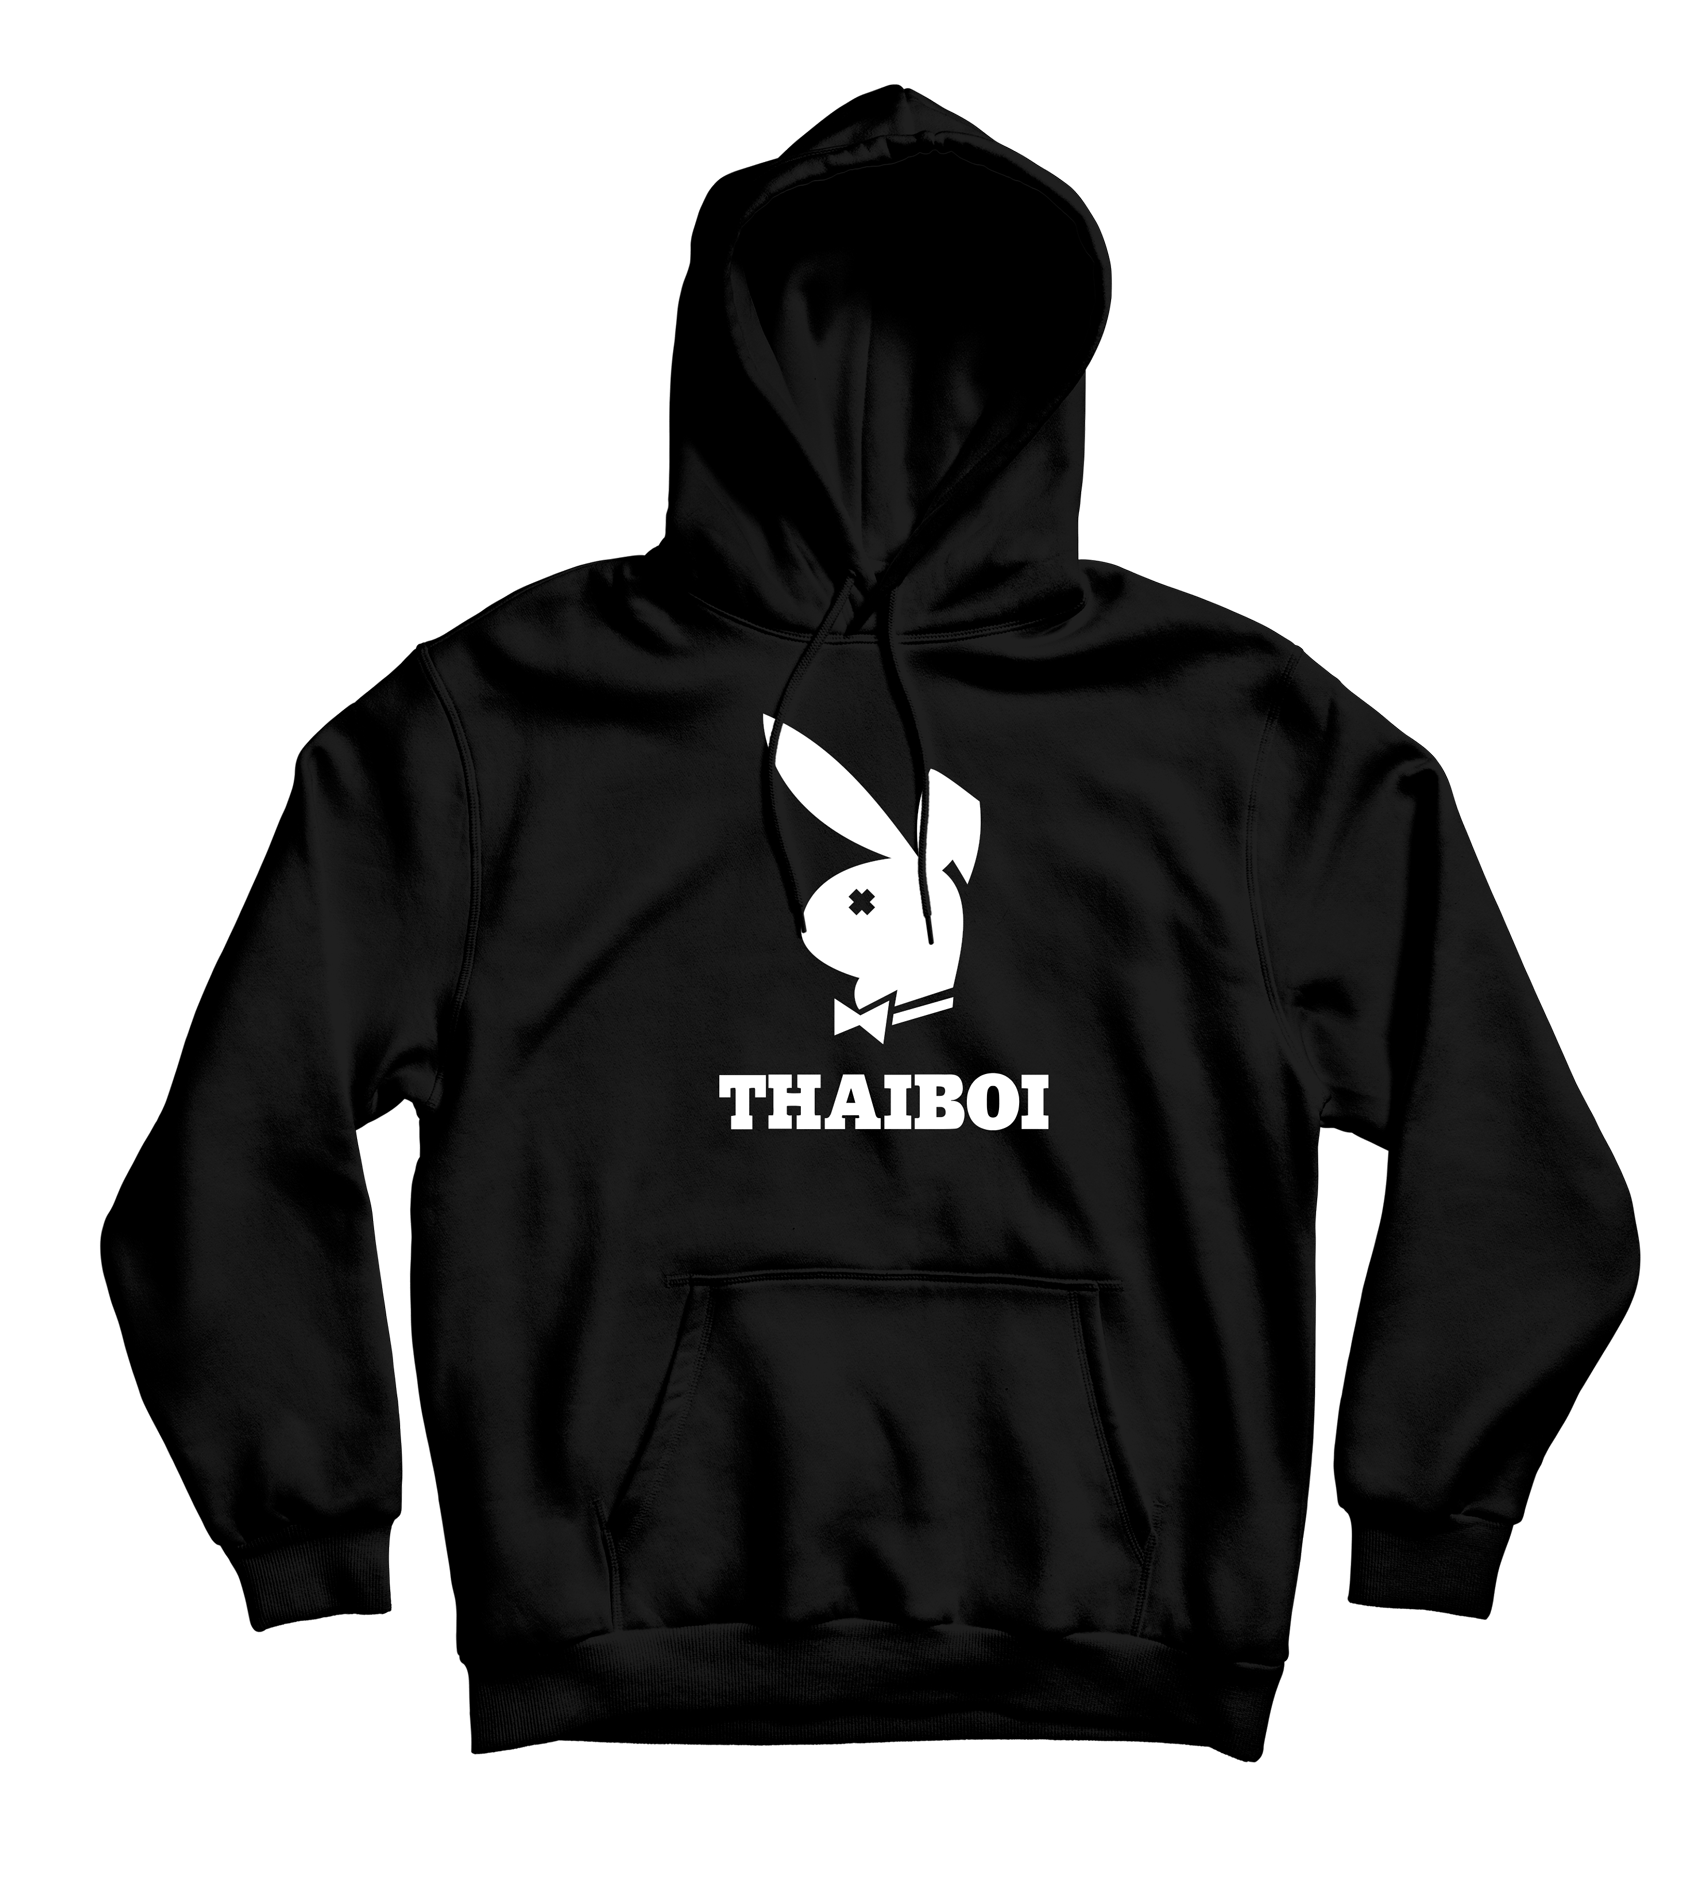 Thaiboi hoodie black